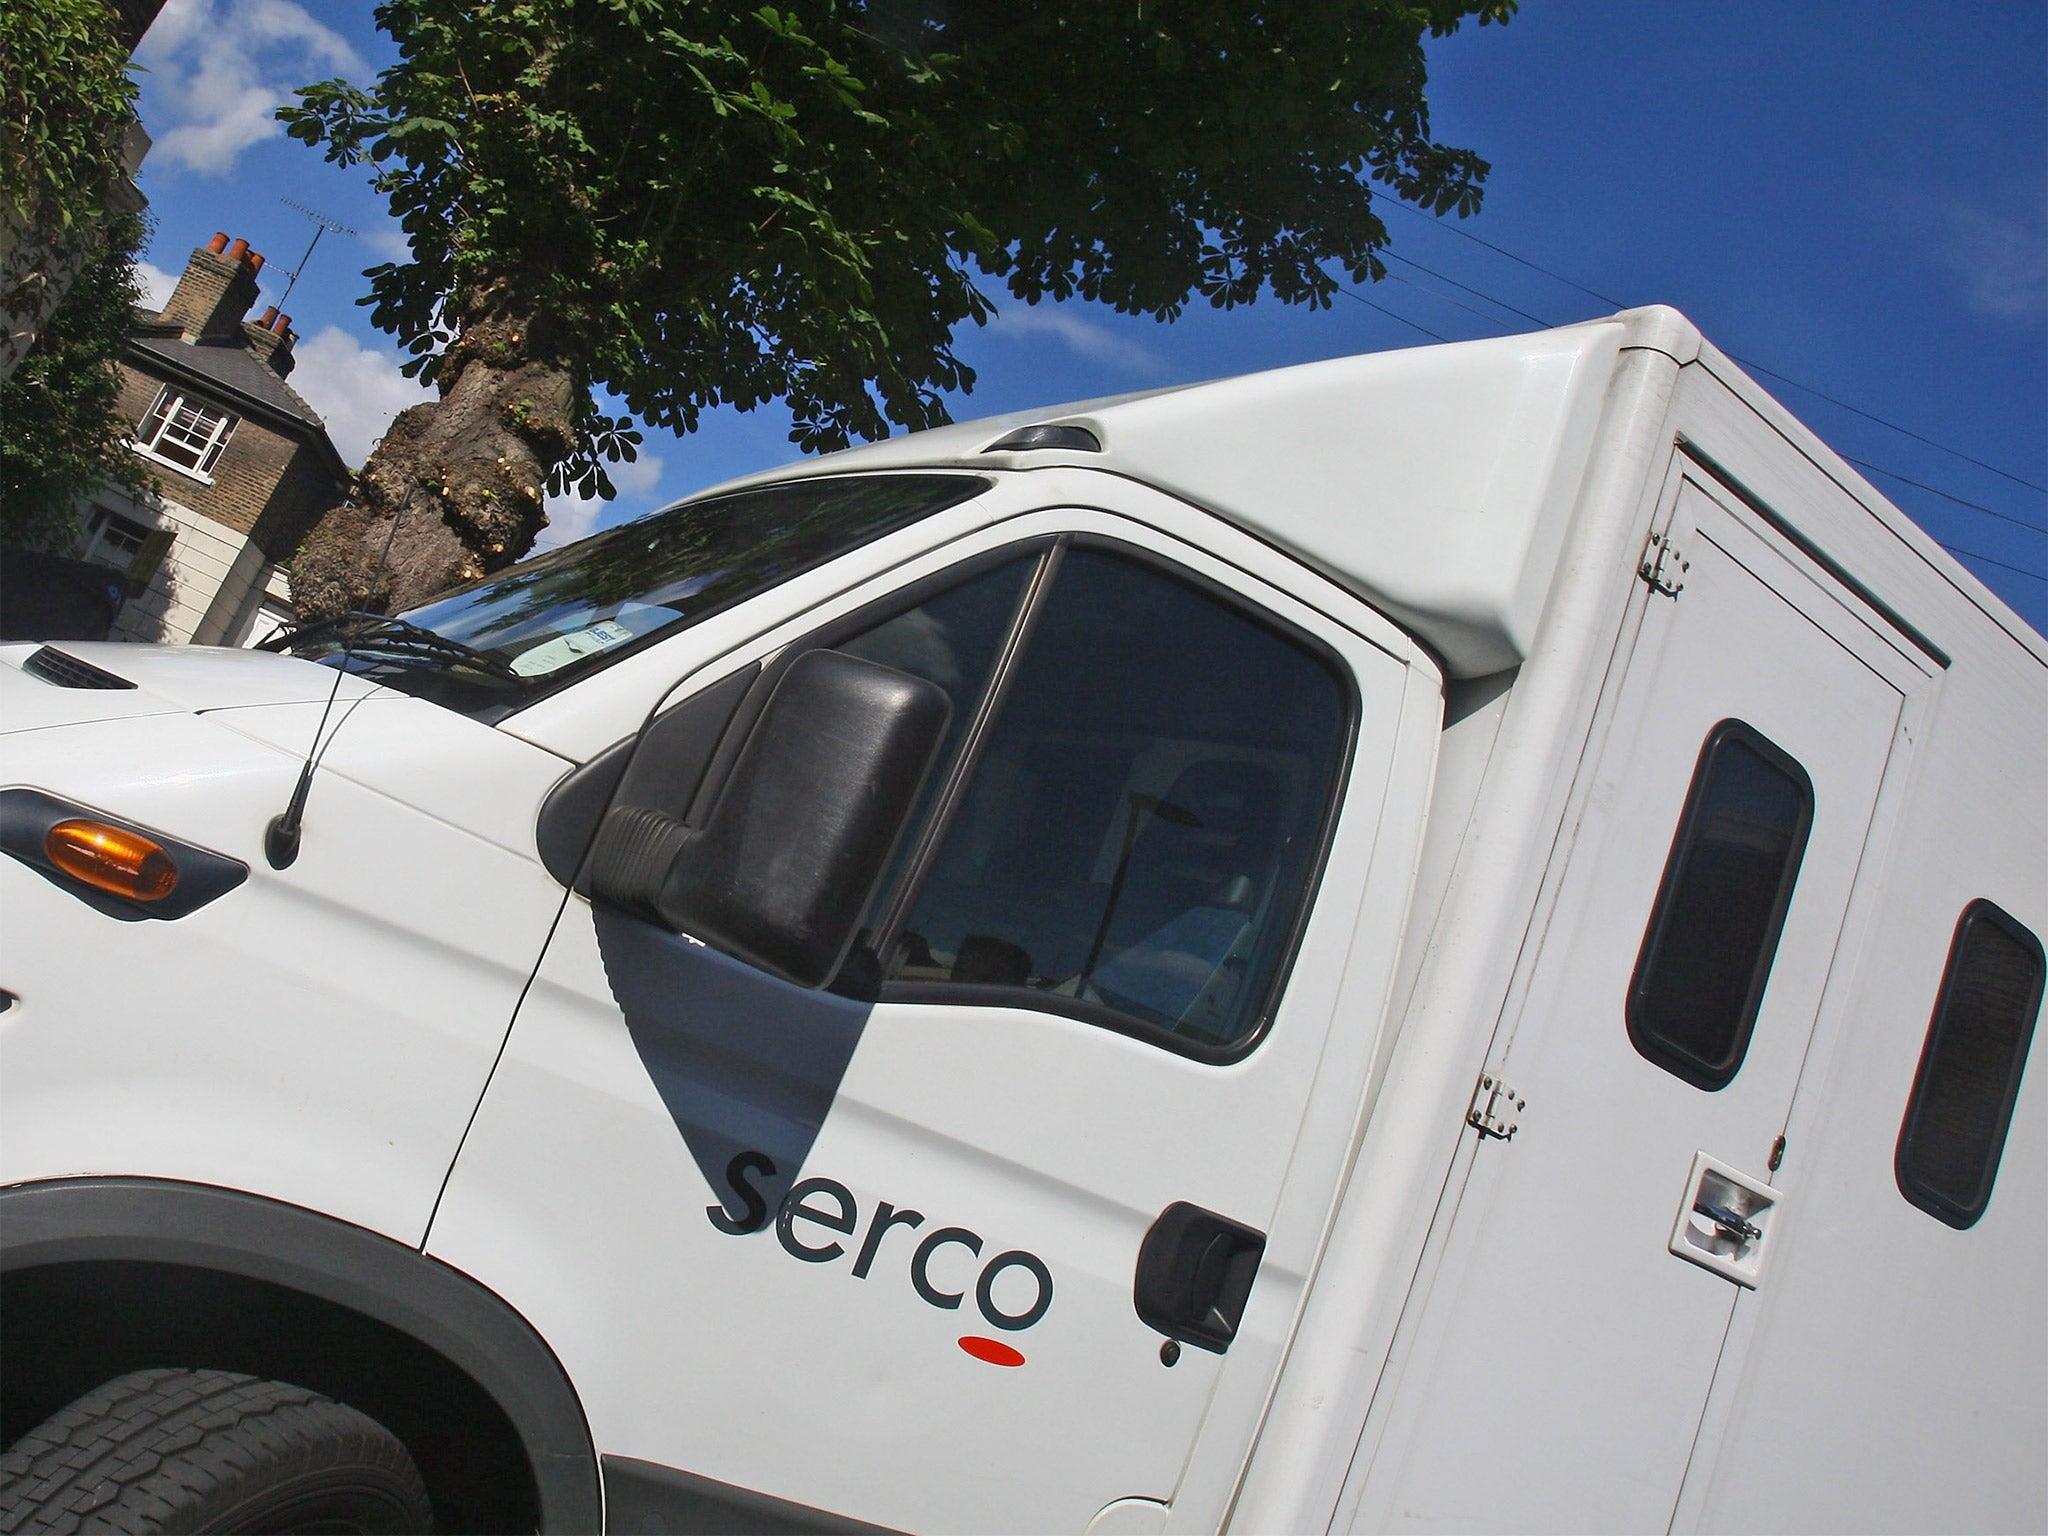 Serco runs five of the 14 private prisons in the UK